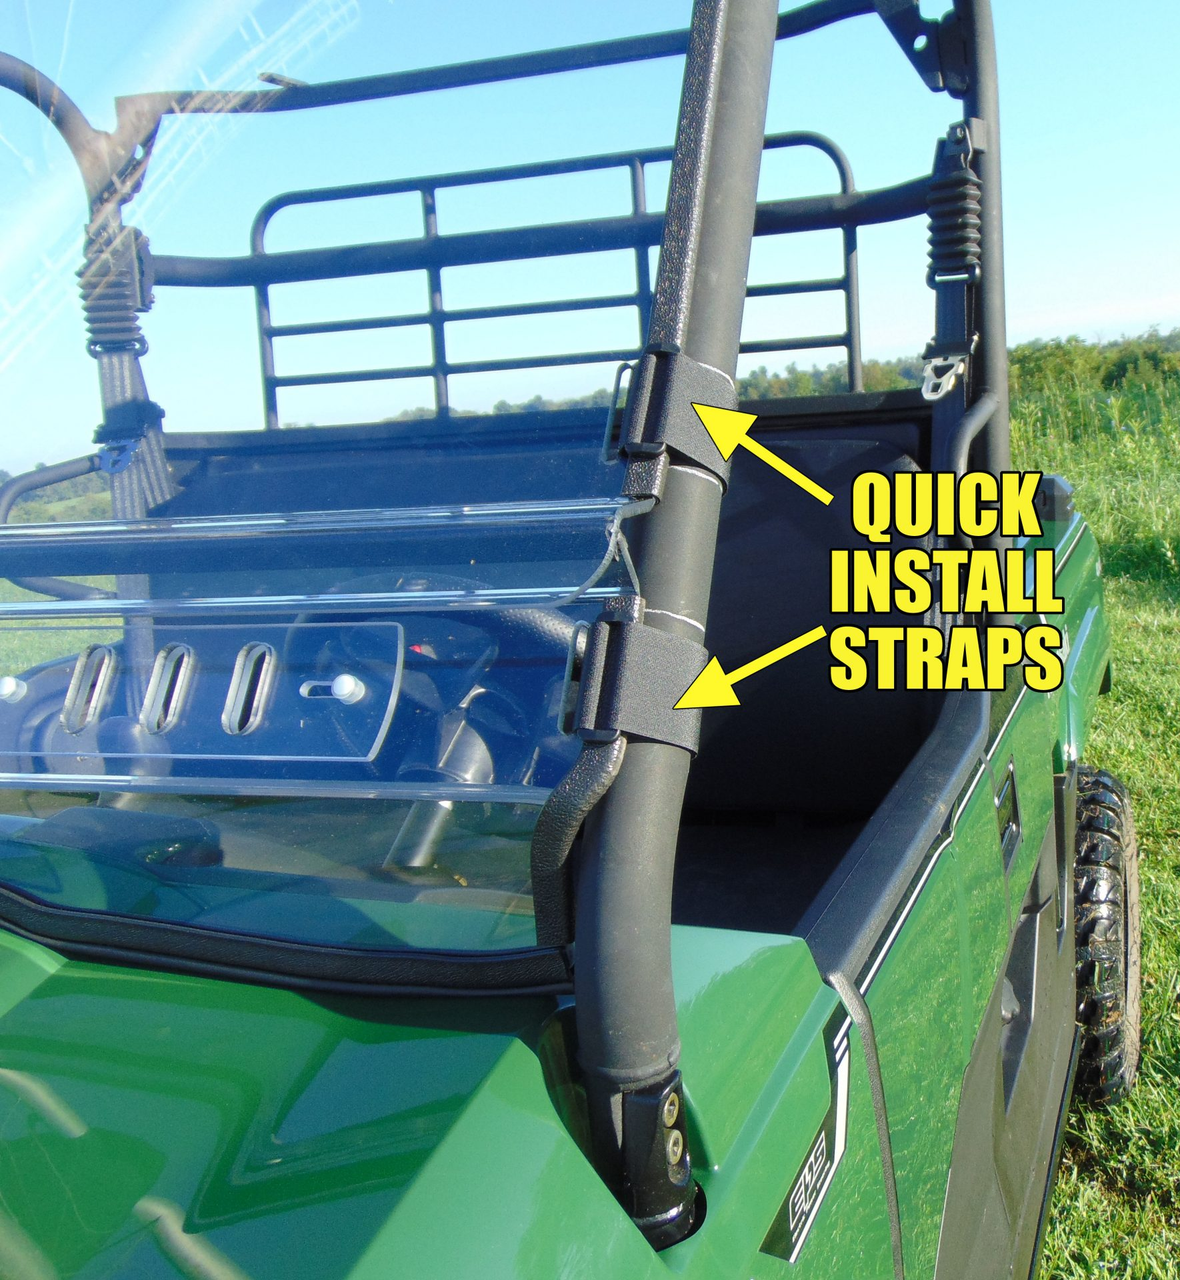 3 Star side x side Kawasaki Teryx 4/800 polycarbonate windshield quick install straps